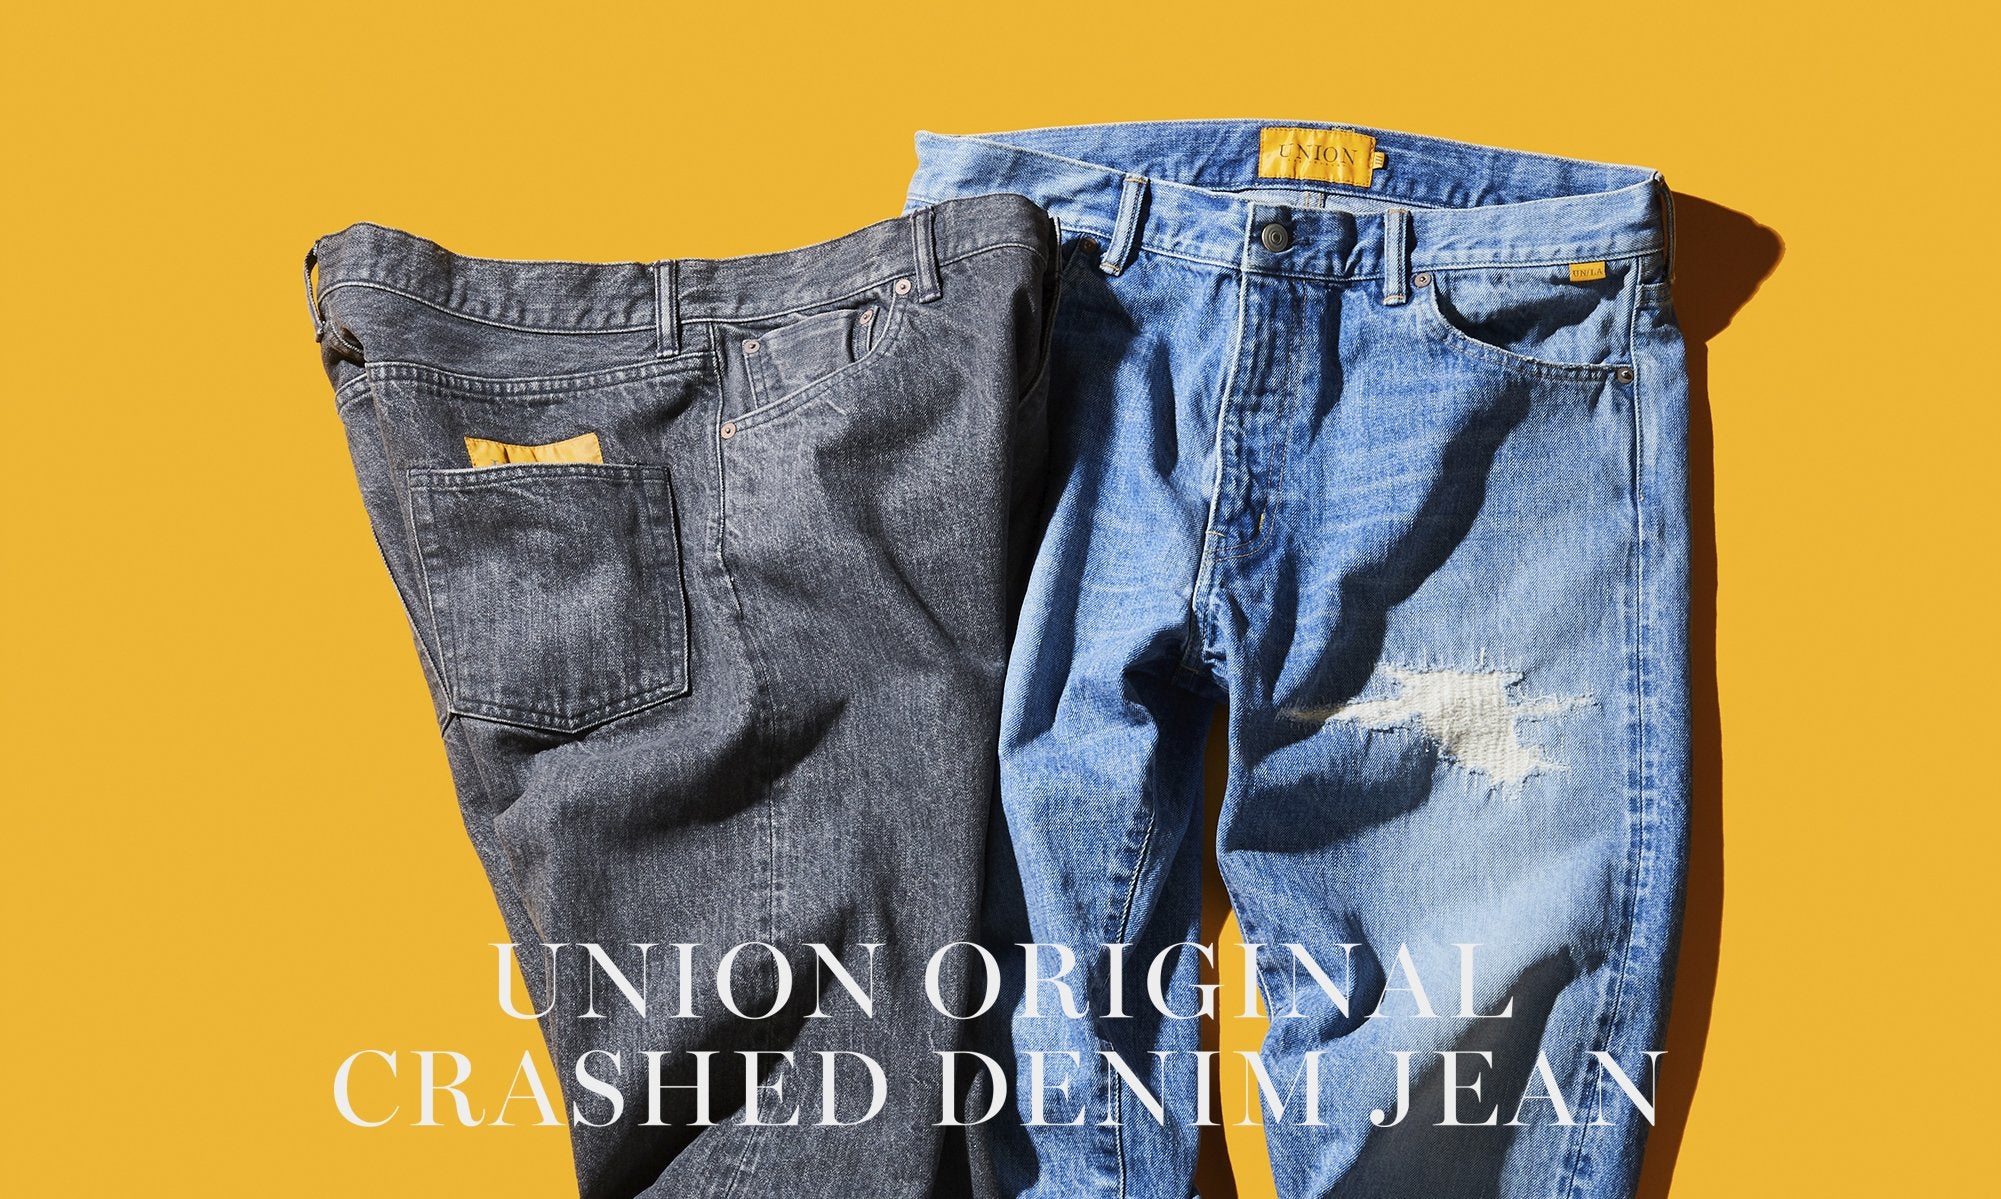 Union Original Crashed Denim Jean